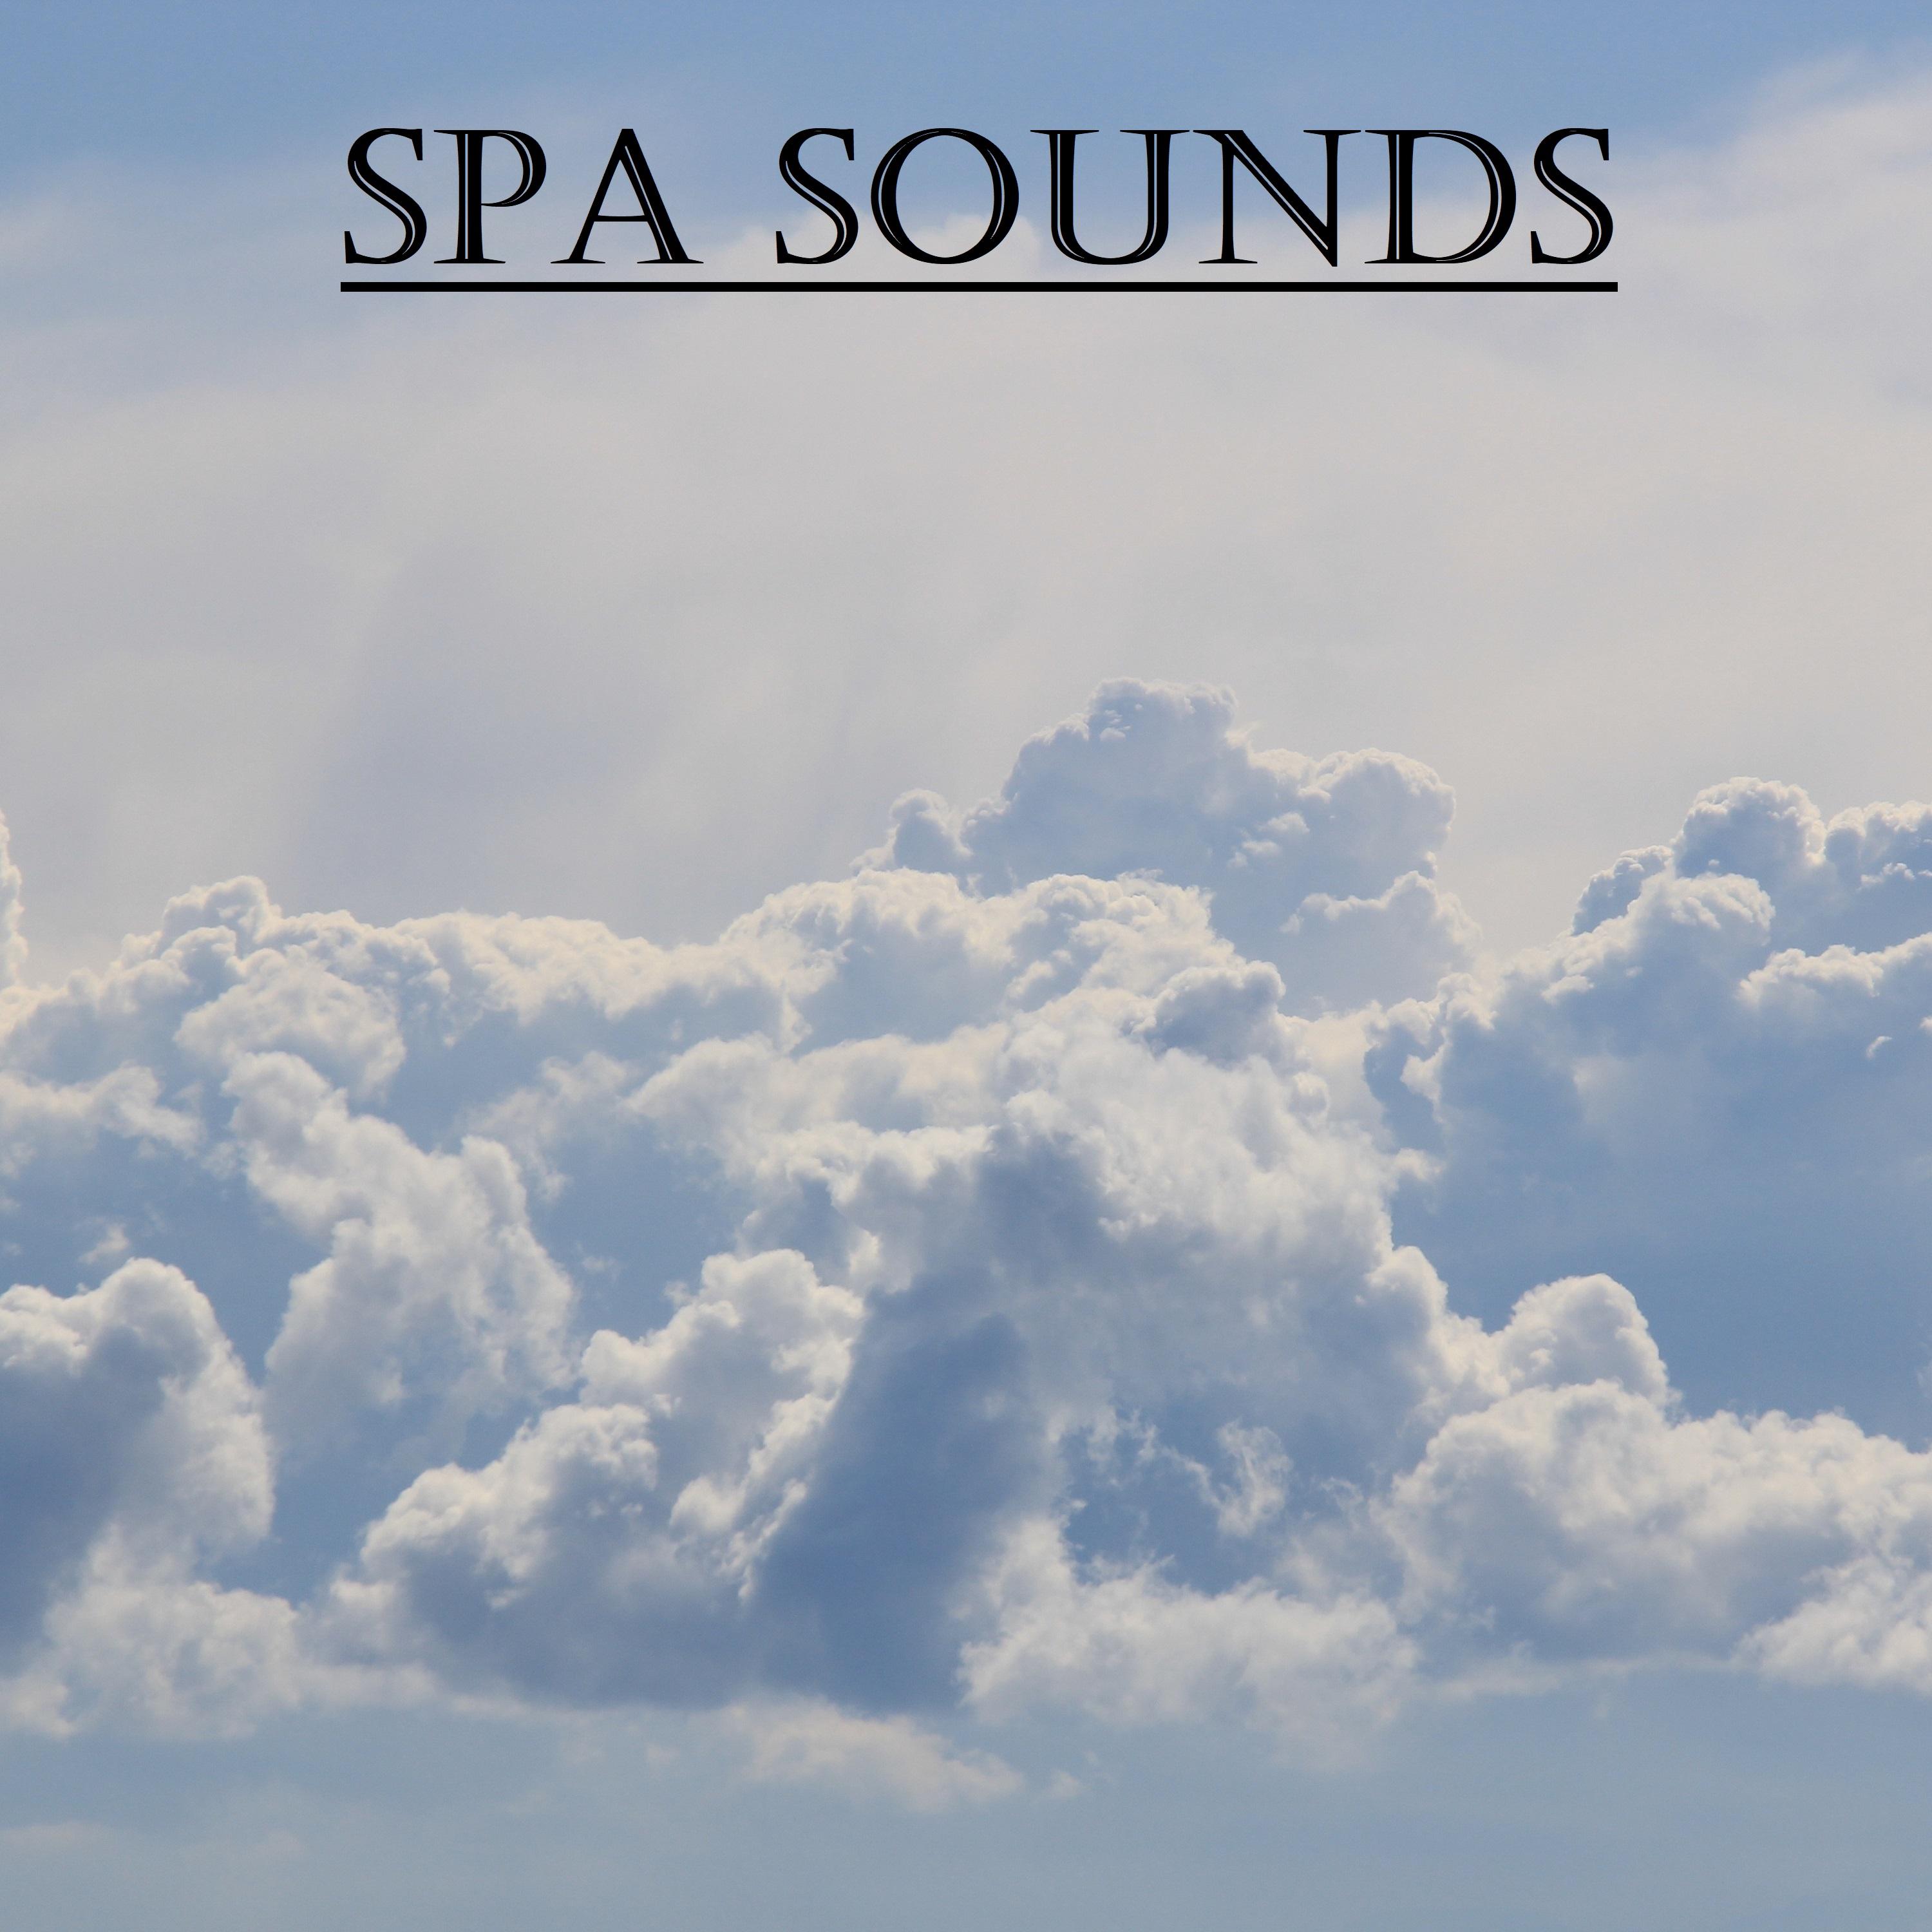 15 Meditative, Relaxing Spa Sounds